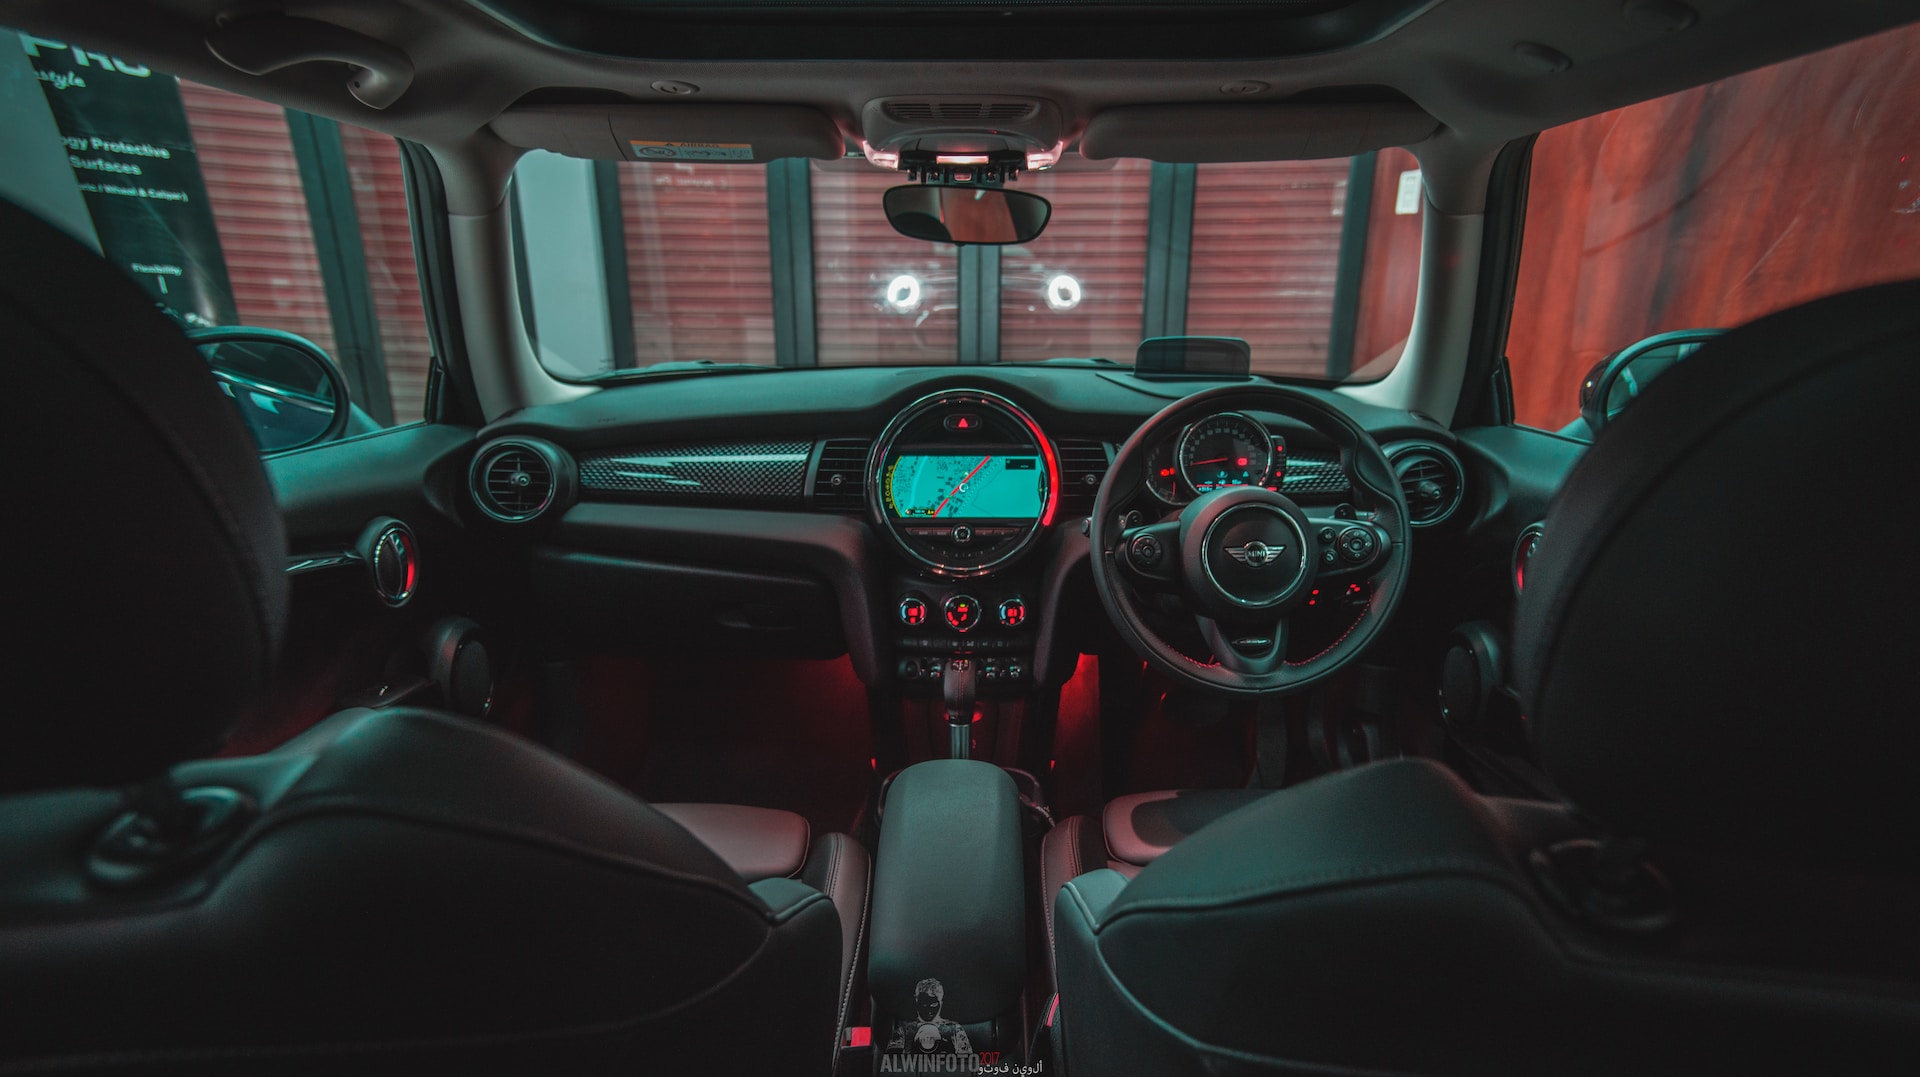 Interior of a car